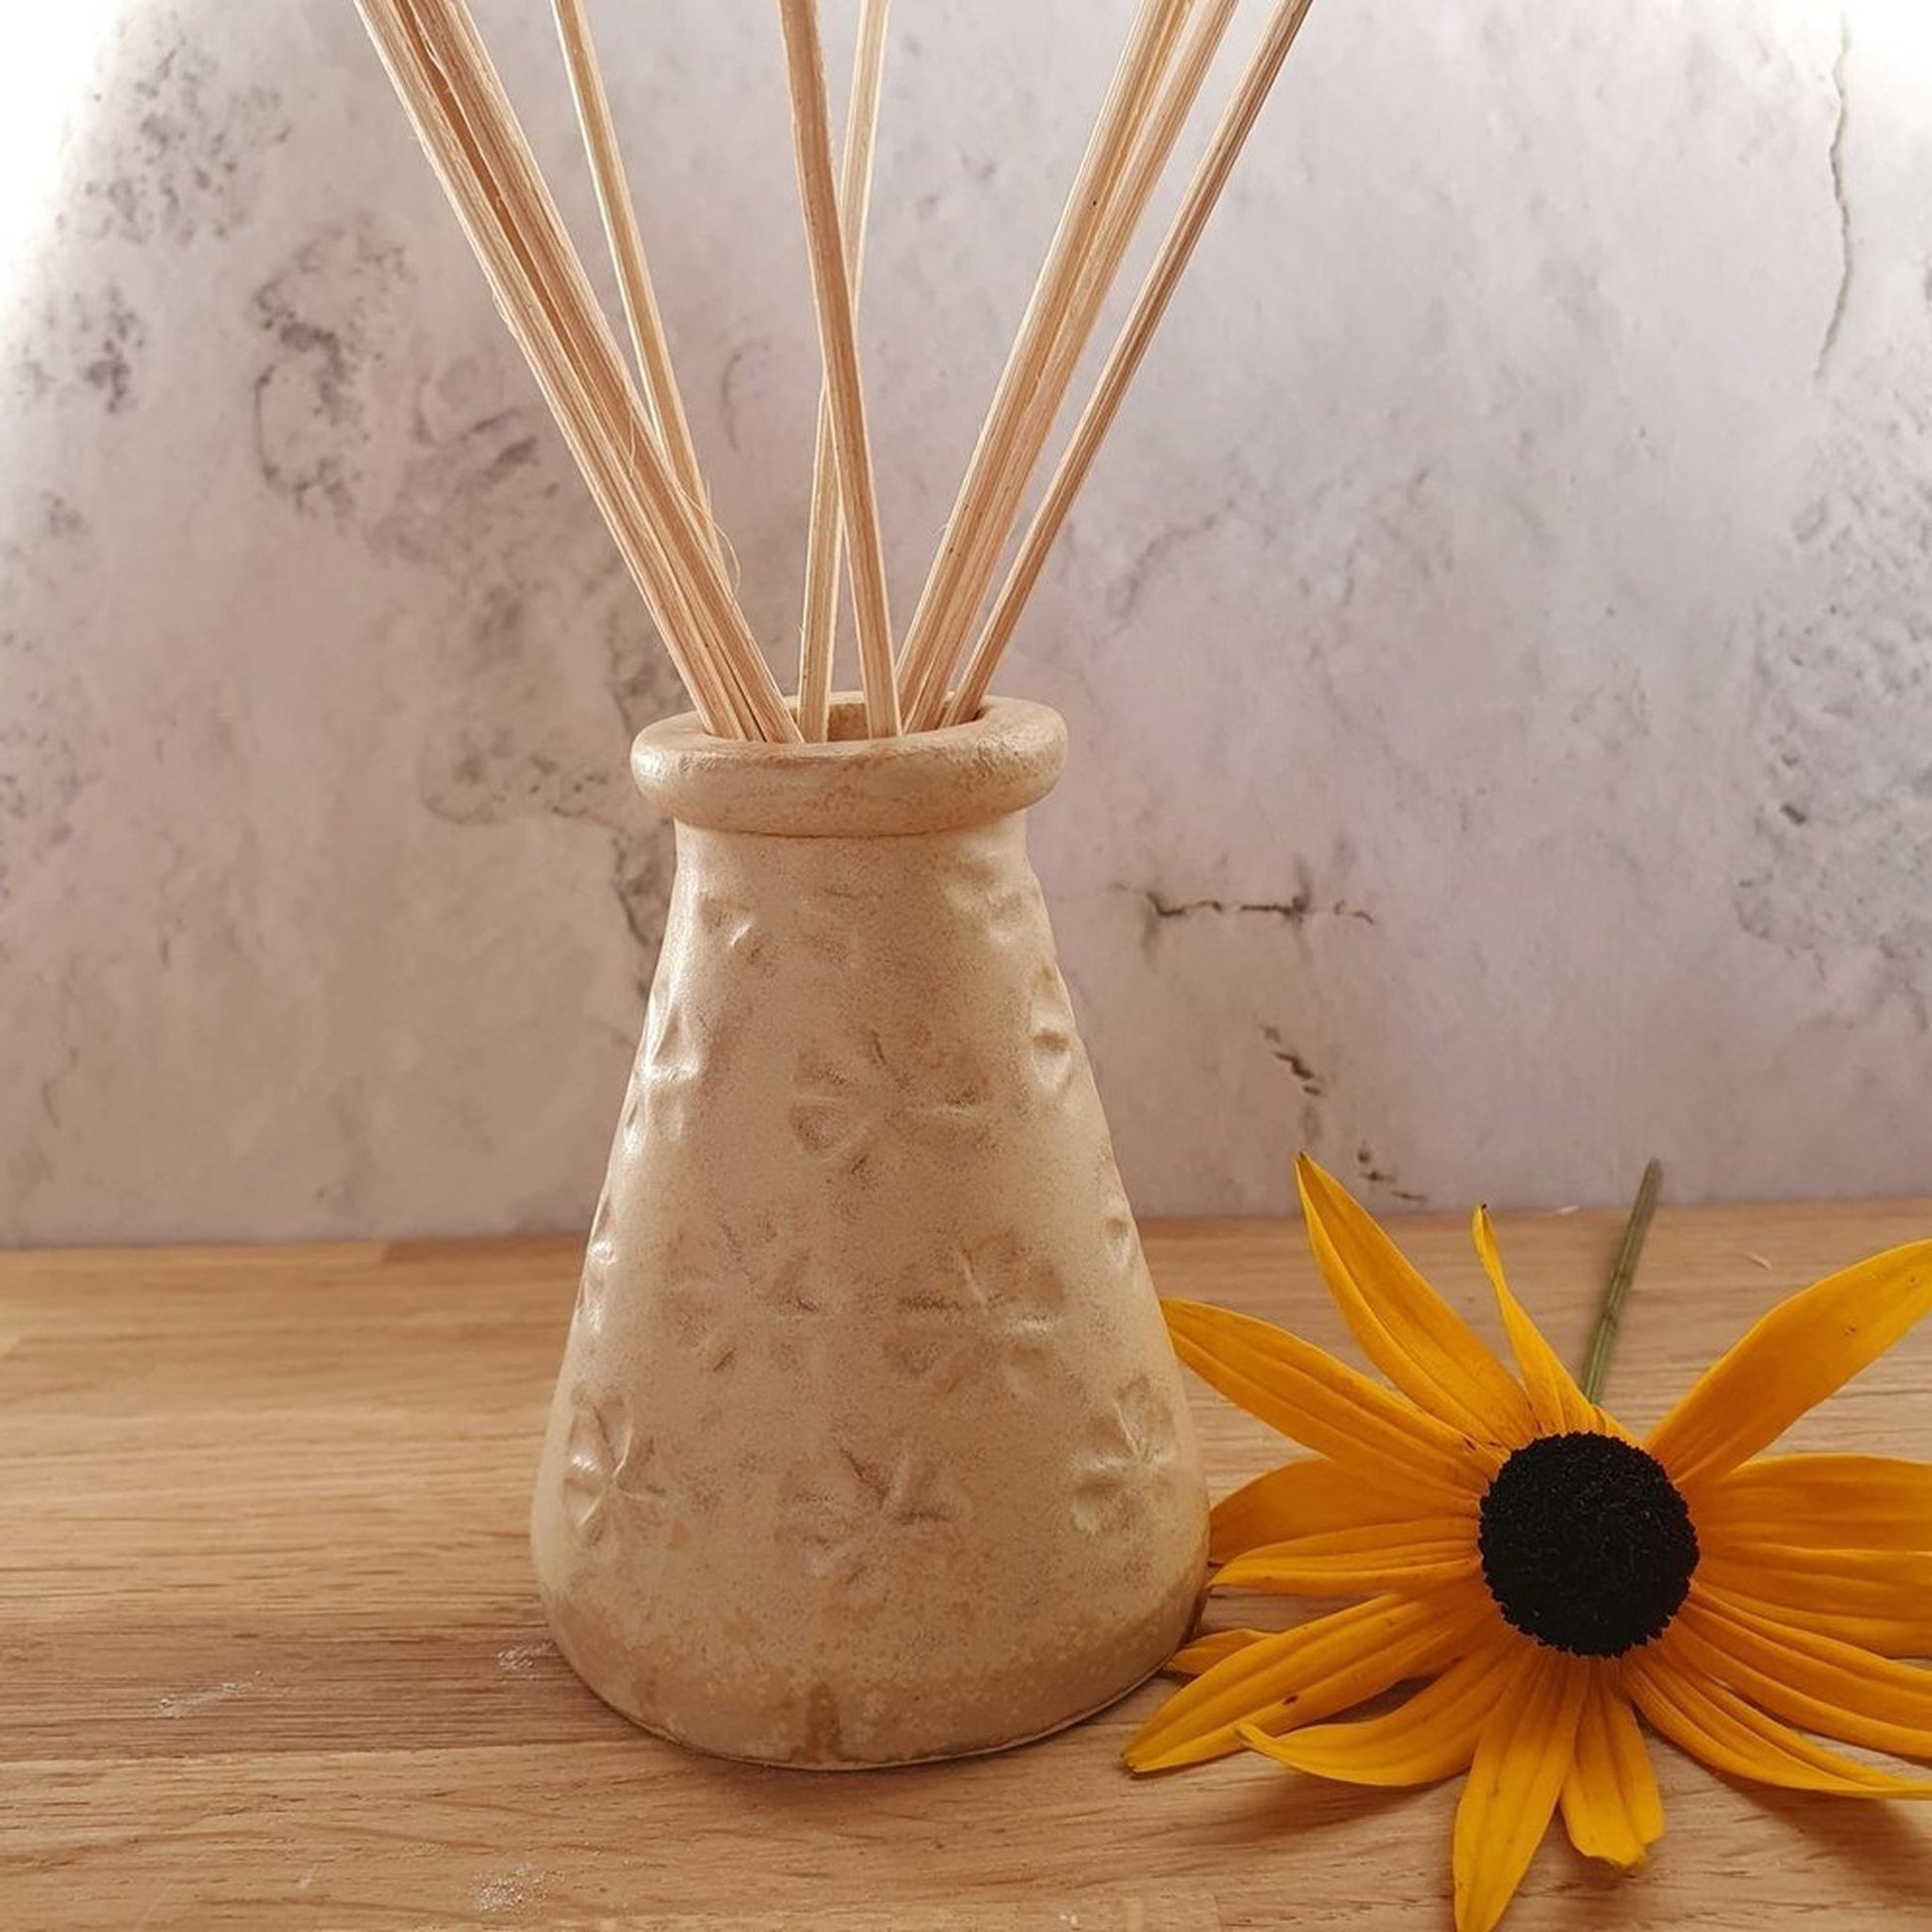 Ceramic handmade reed diffuser or small flower vase _image